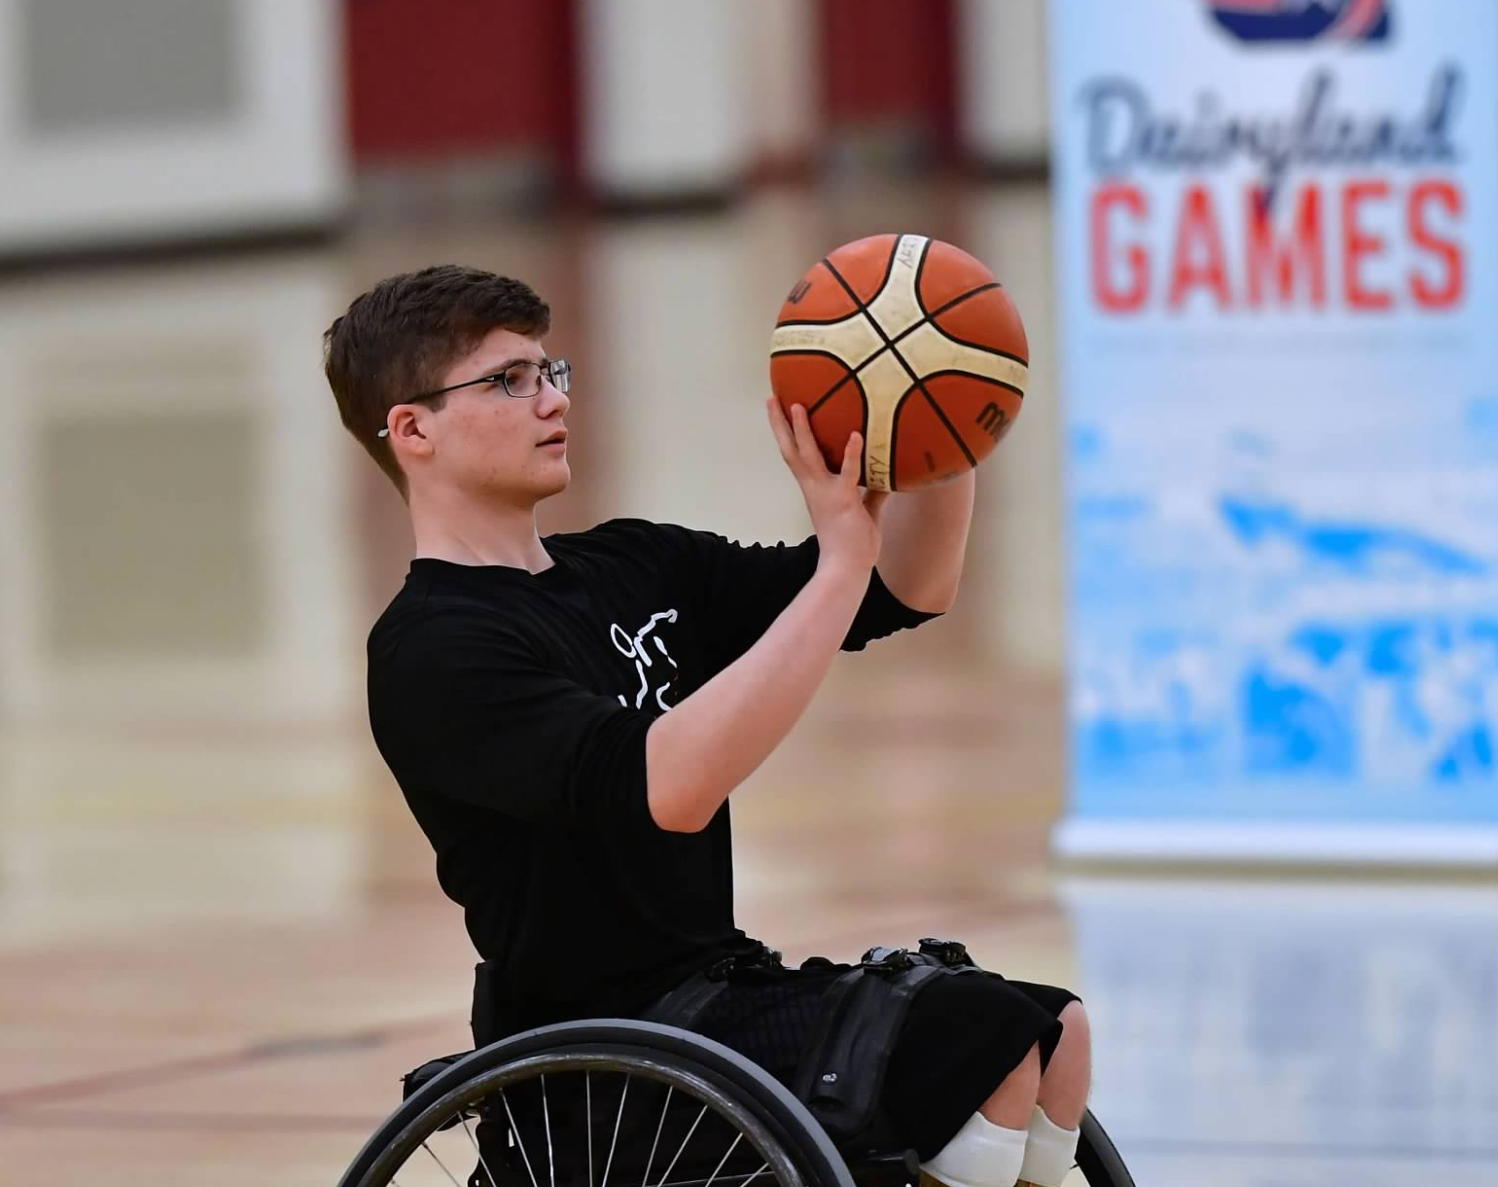 Wheelchair athlete shooting basketball